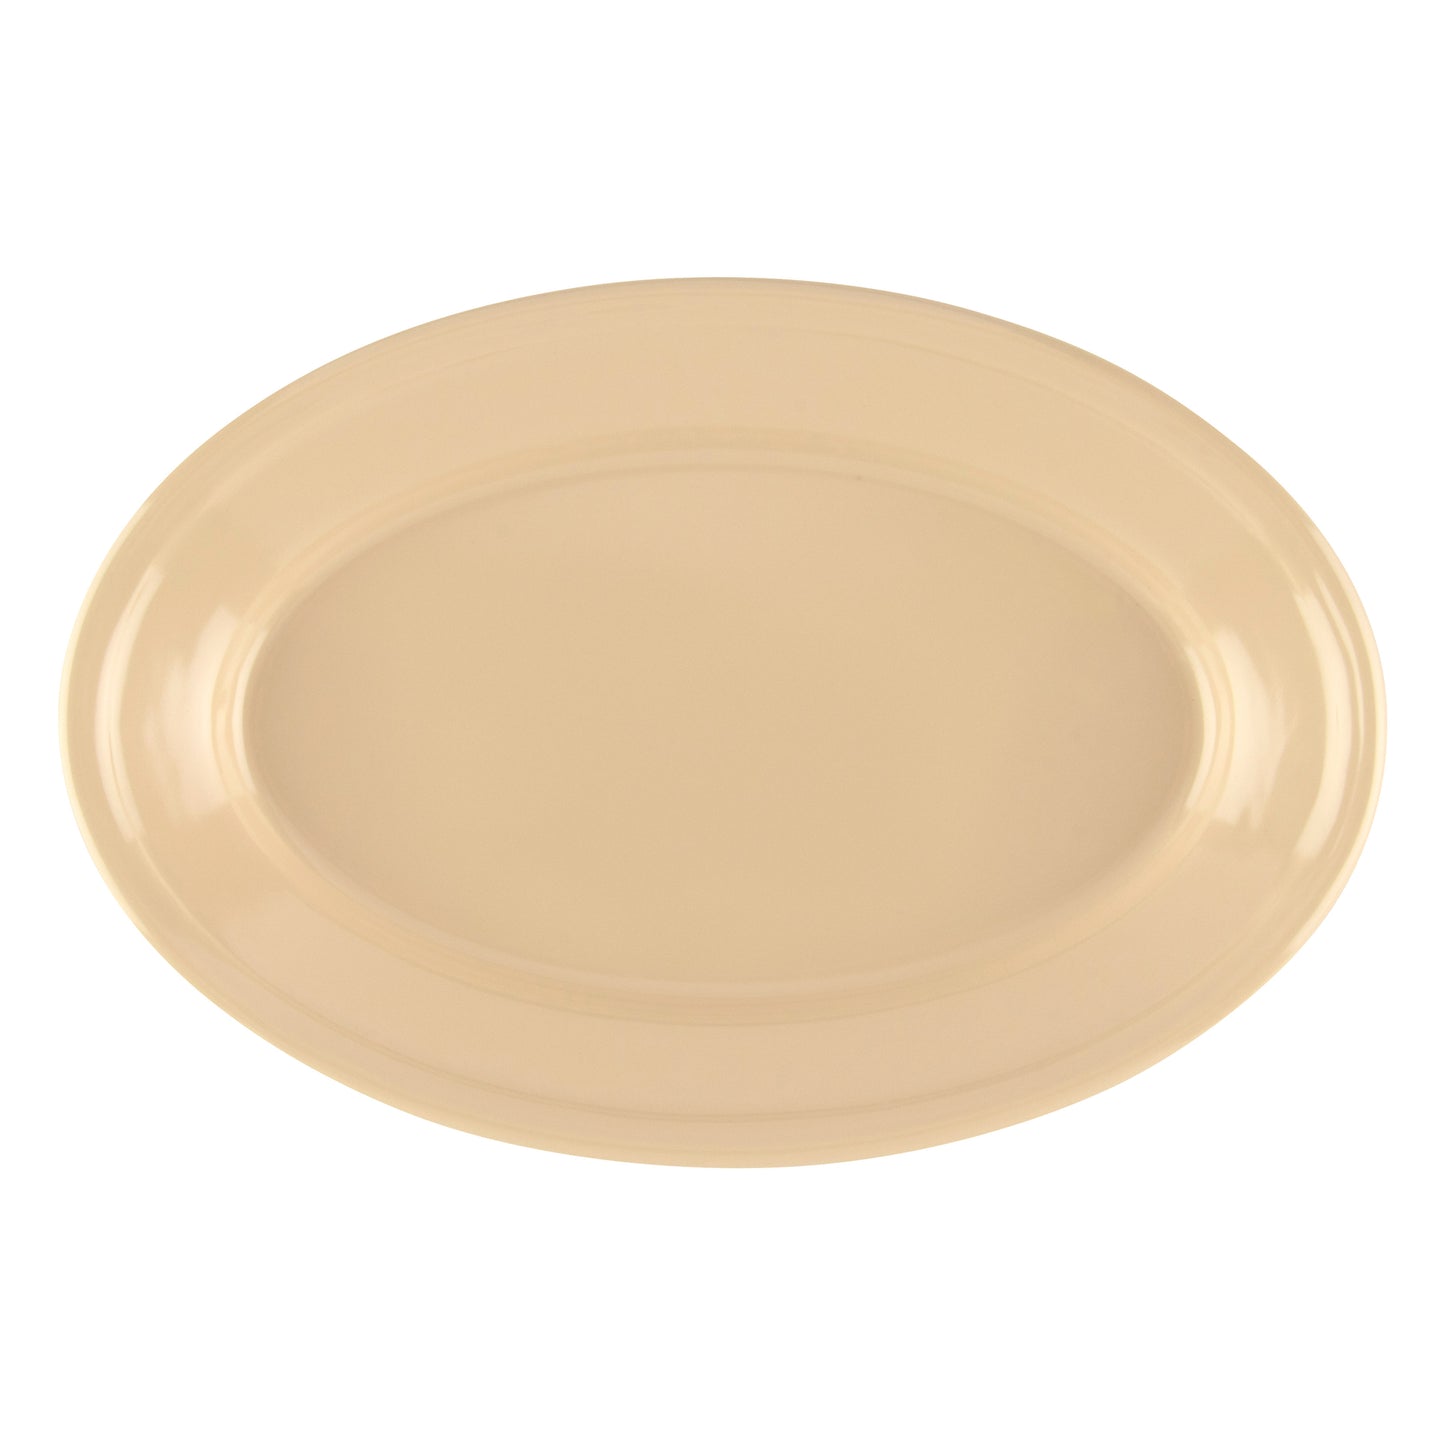 9.25" x 6.25" Oval Platter (12 Pack)